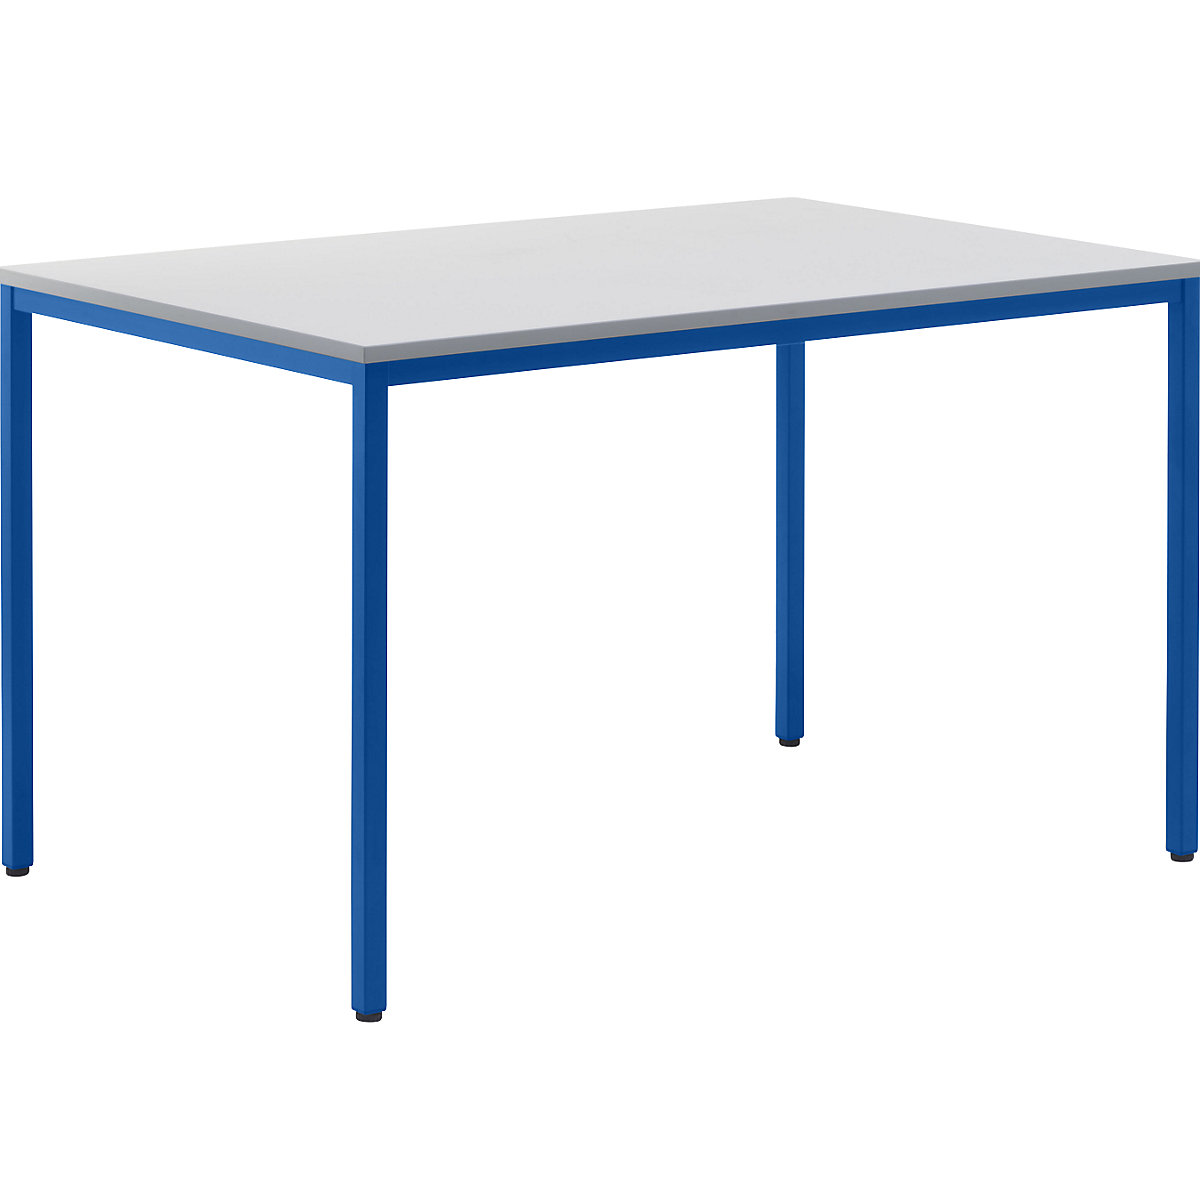 Multifunctionele tafel – eurokraft basic, h x b x d = 720 x 1200 x 800 mm, blad lichtgrijs, frame gentiaanblauw